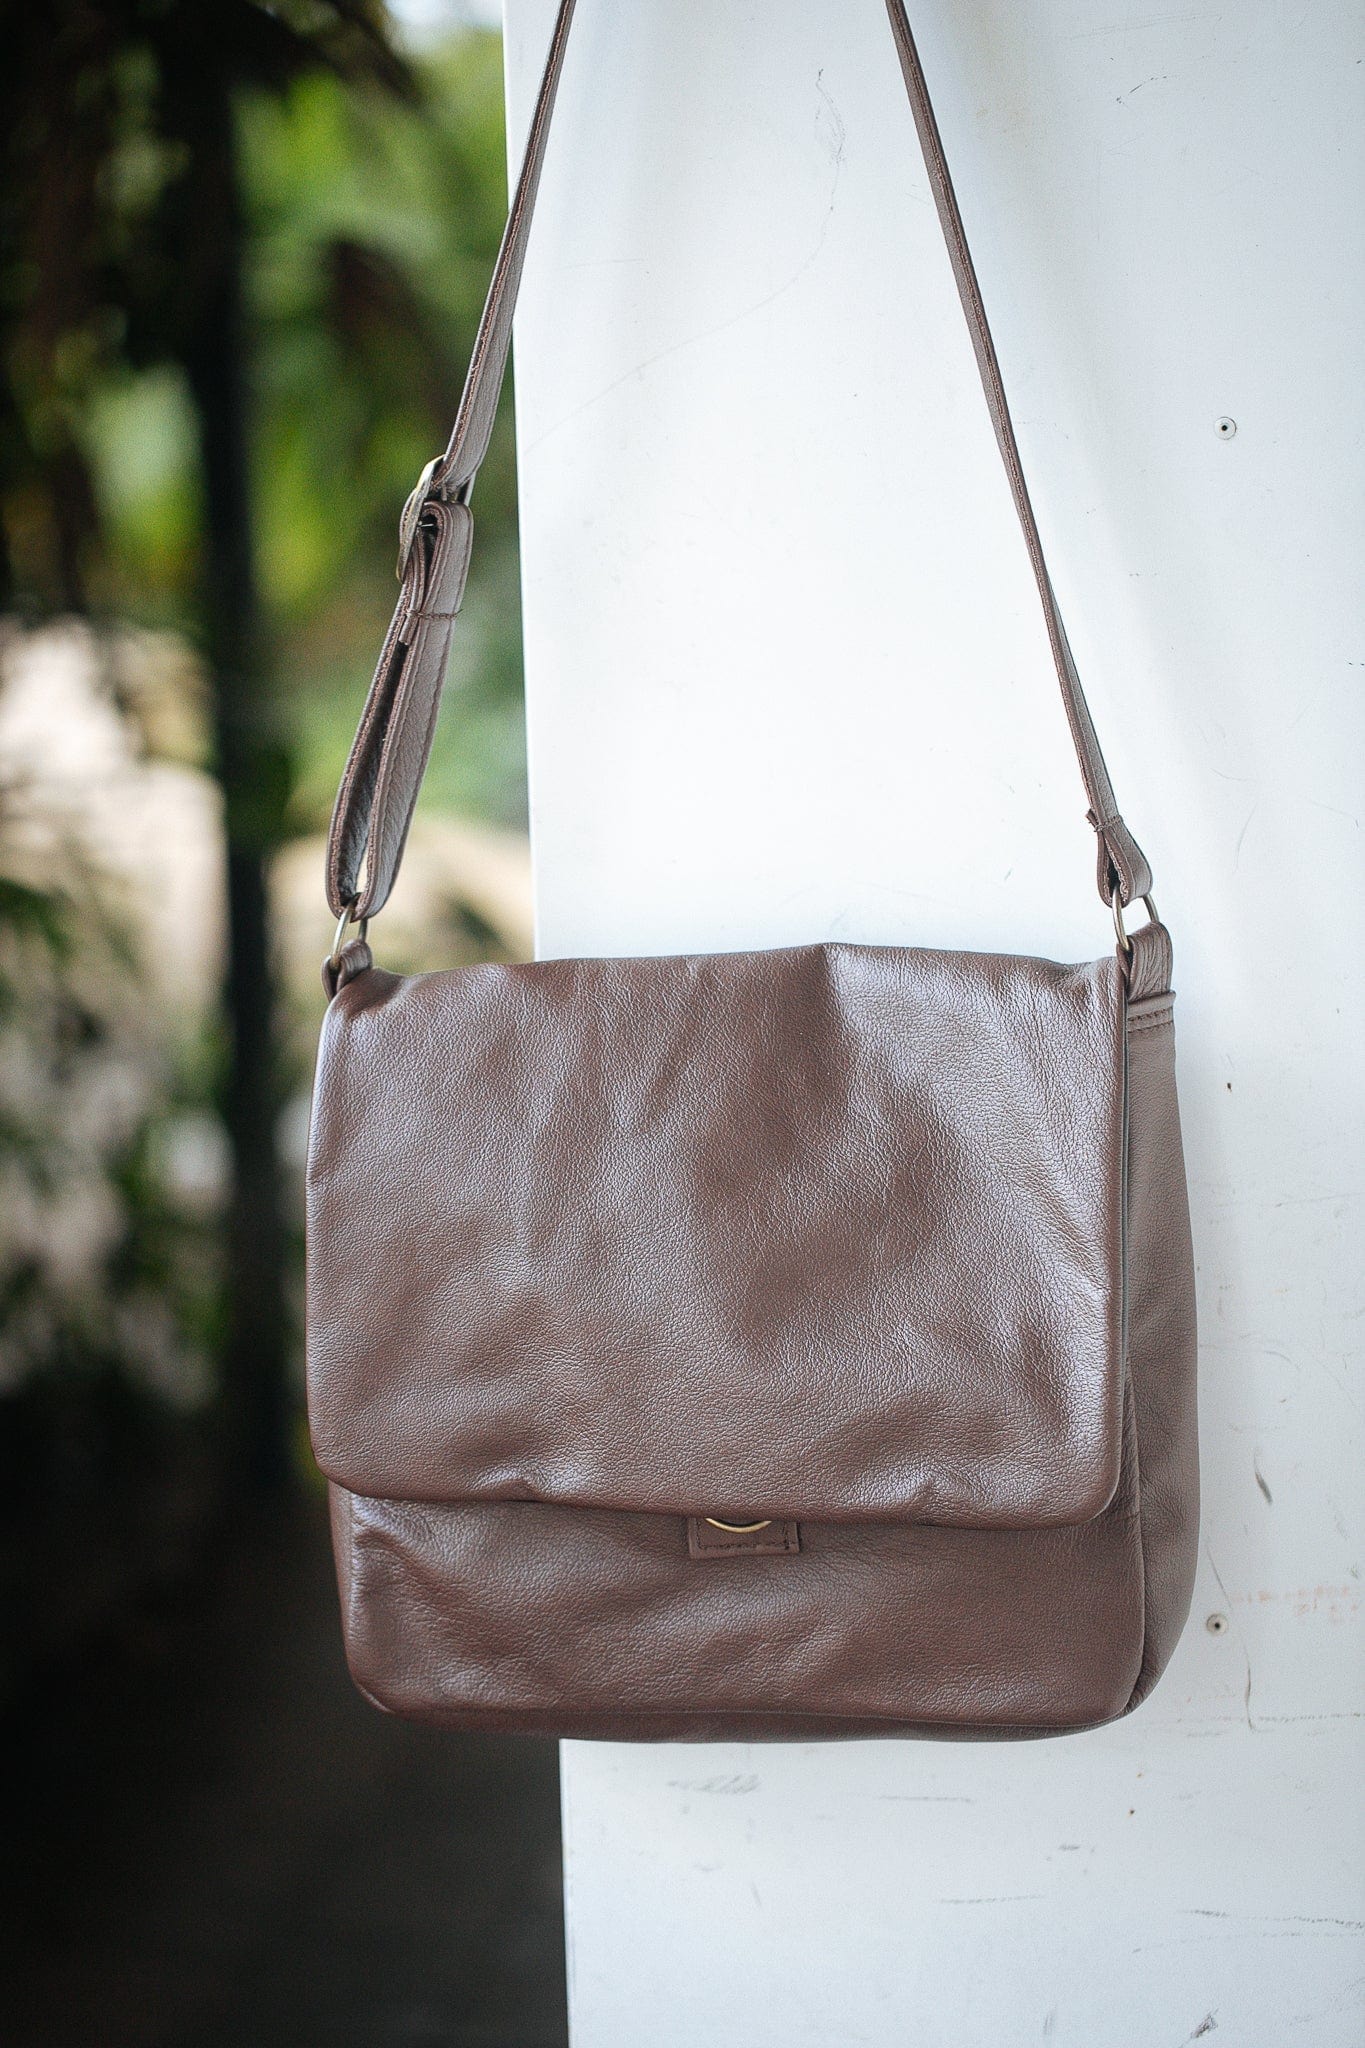 The Real McCaul Shoulder Bags Chestnut Universal Satchel Bag - Medium - Cowhide Australian Made Australian Owned Leather Satchel Bag- Australian Made in Kangaroo and Cowhide Leather